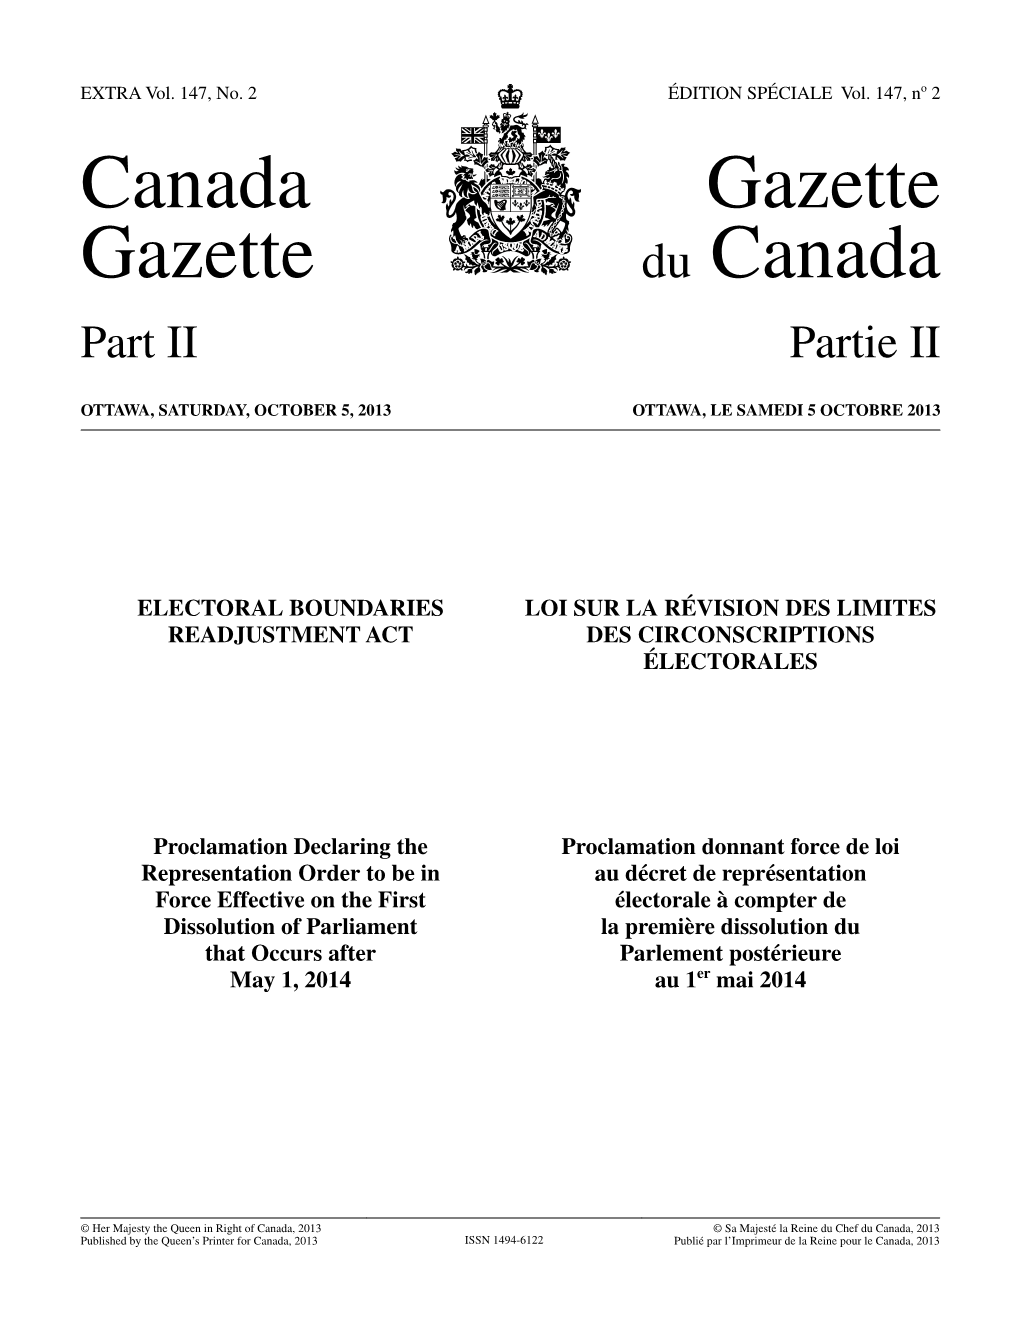 Canada Gazette, Part II, Extra